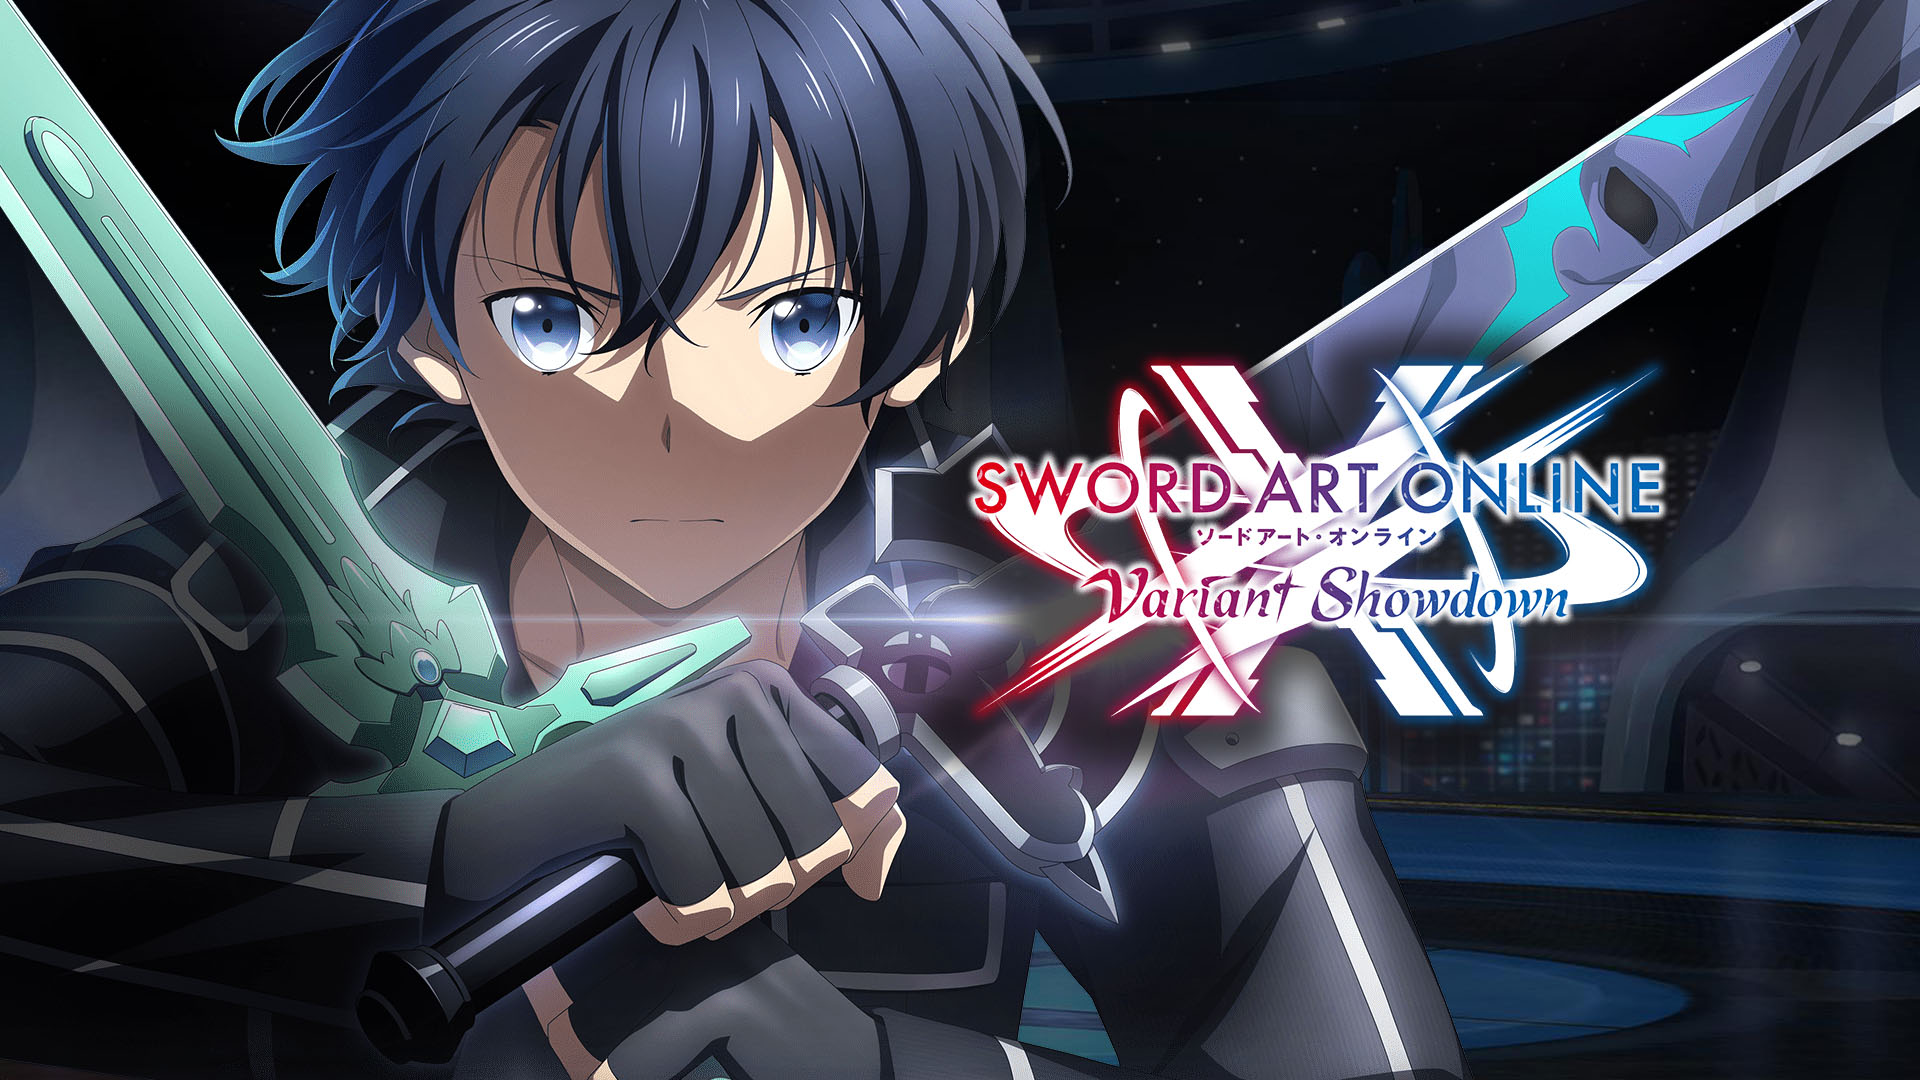 Sword Art Online Variante Showdown 03 28 22 1